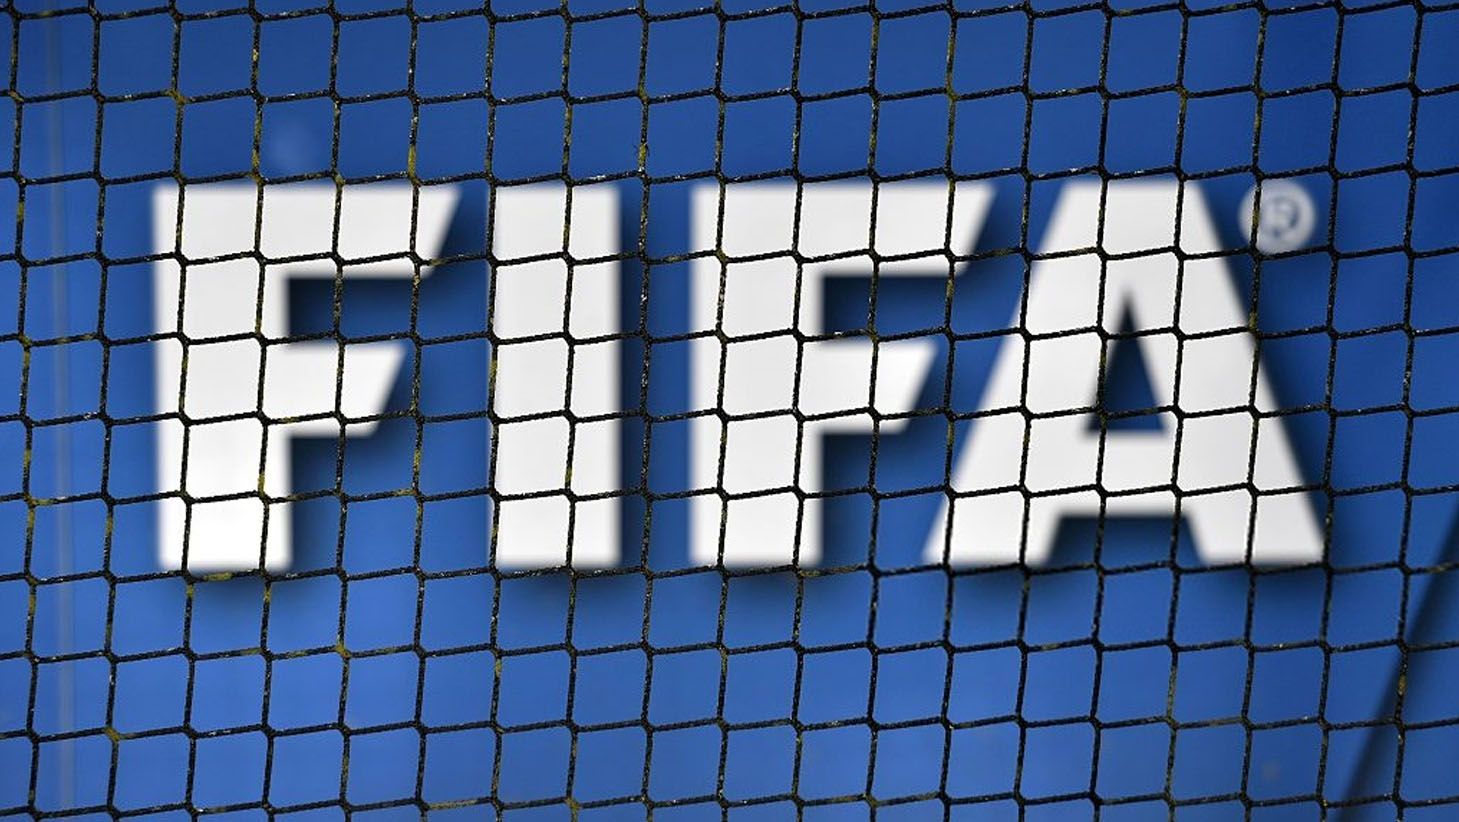 FIFA (Federation Internationale de Football Association) Copyright: © FABRICE COFFRINI/AFP/Getty Images